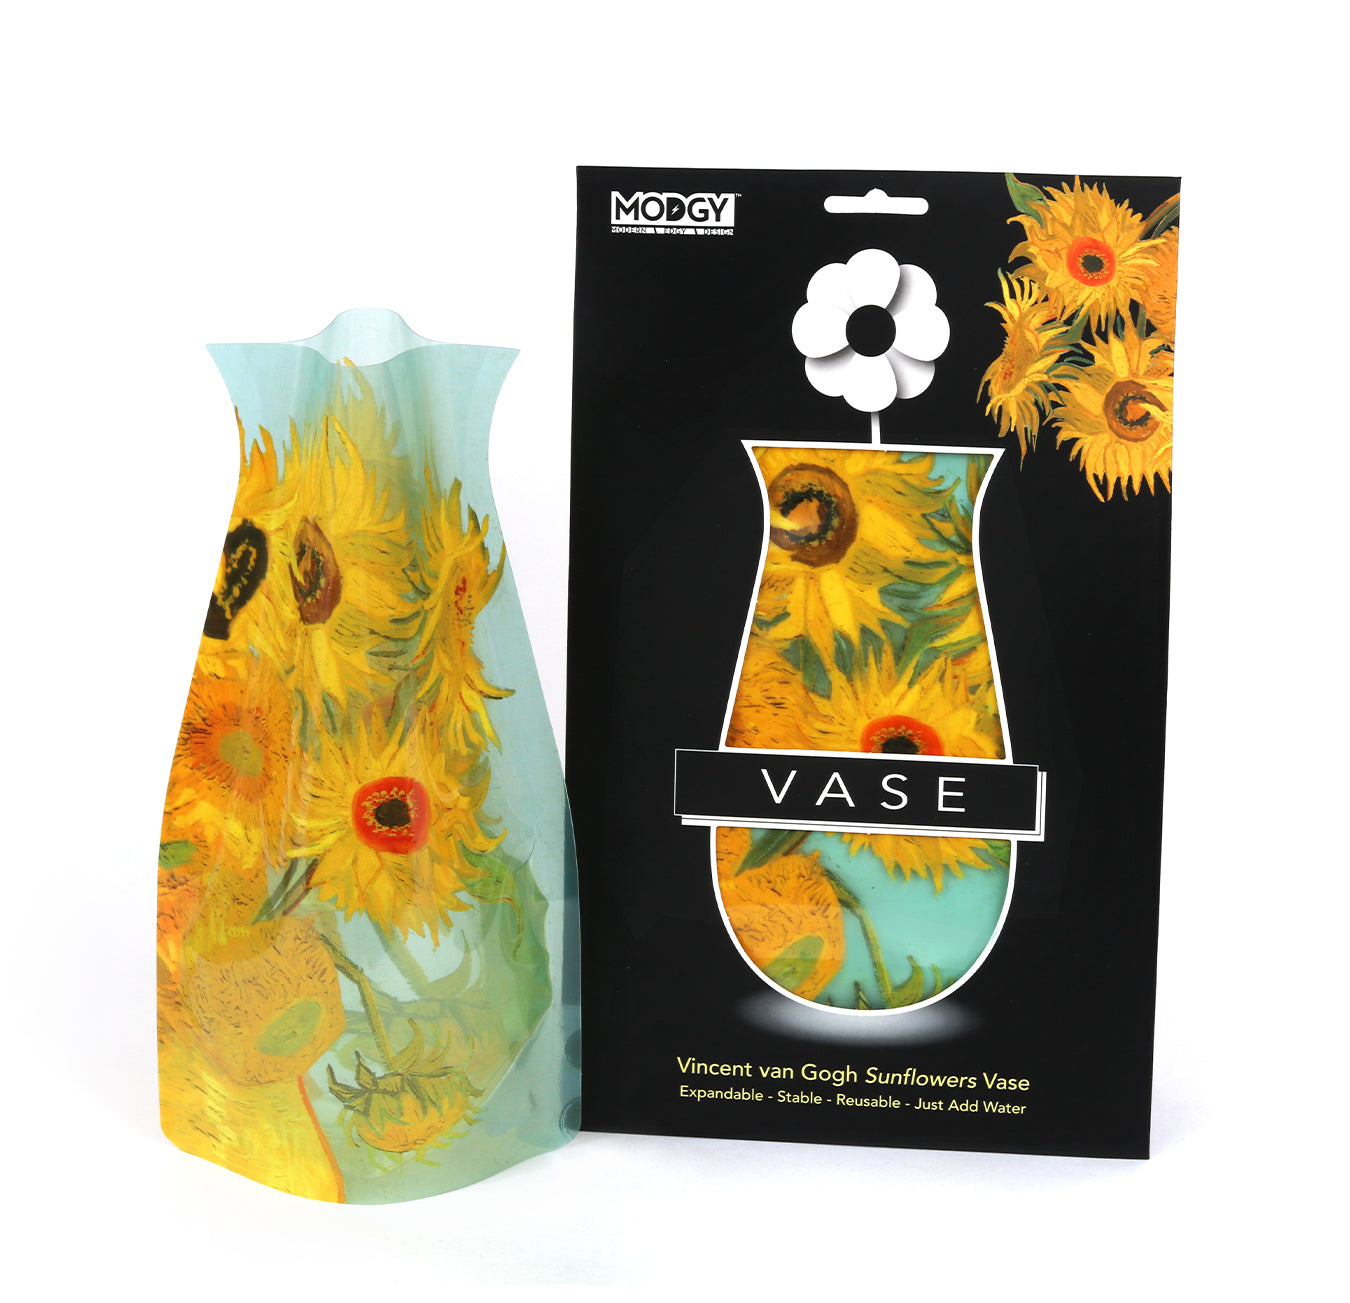 Expandable Vase - Van Gogh Sunflowers Vase